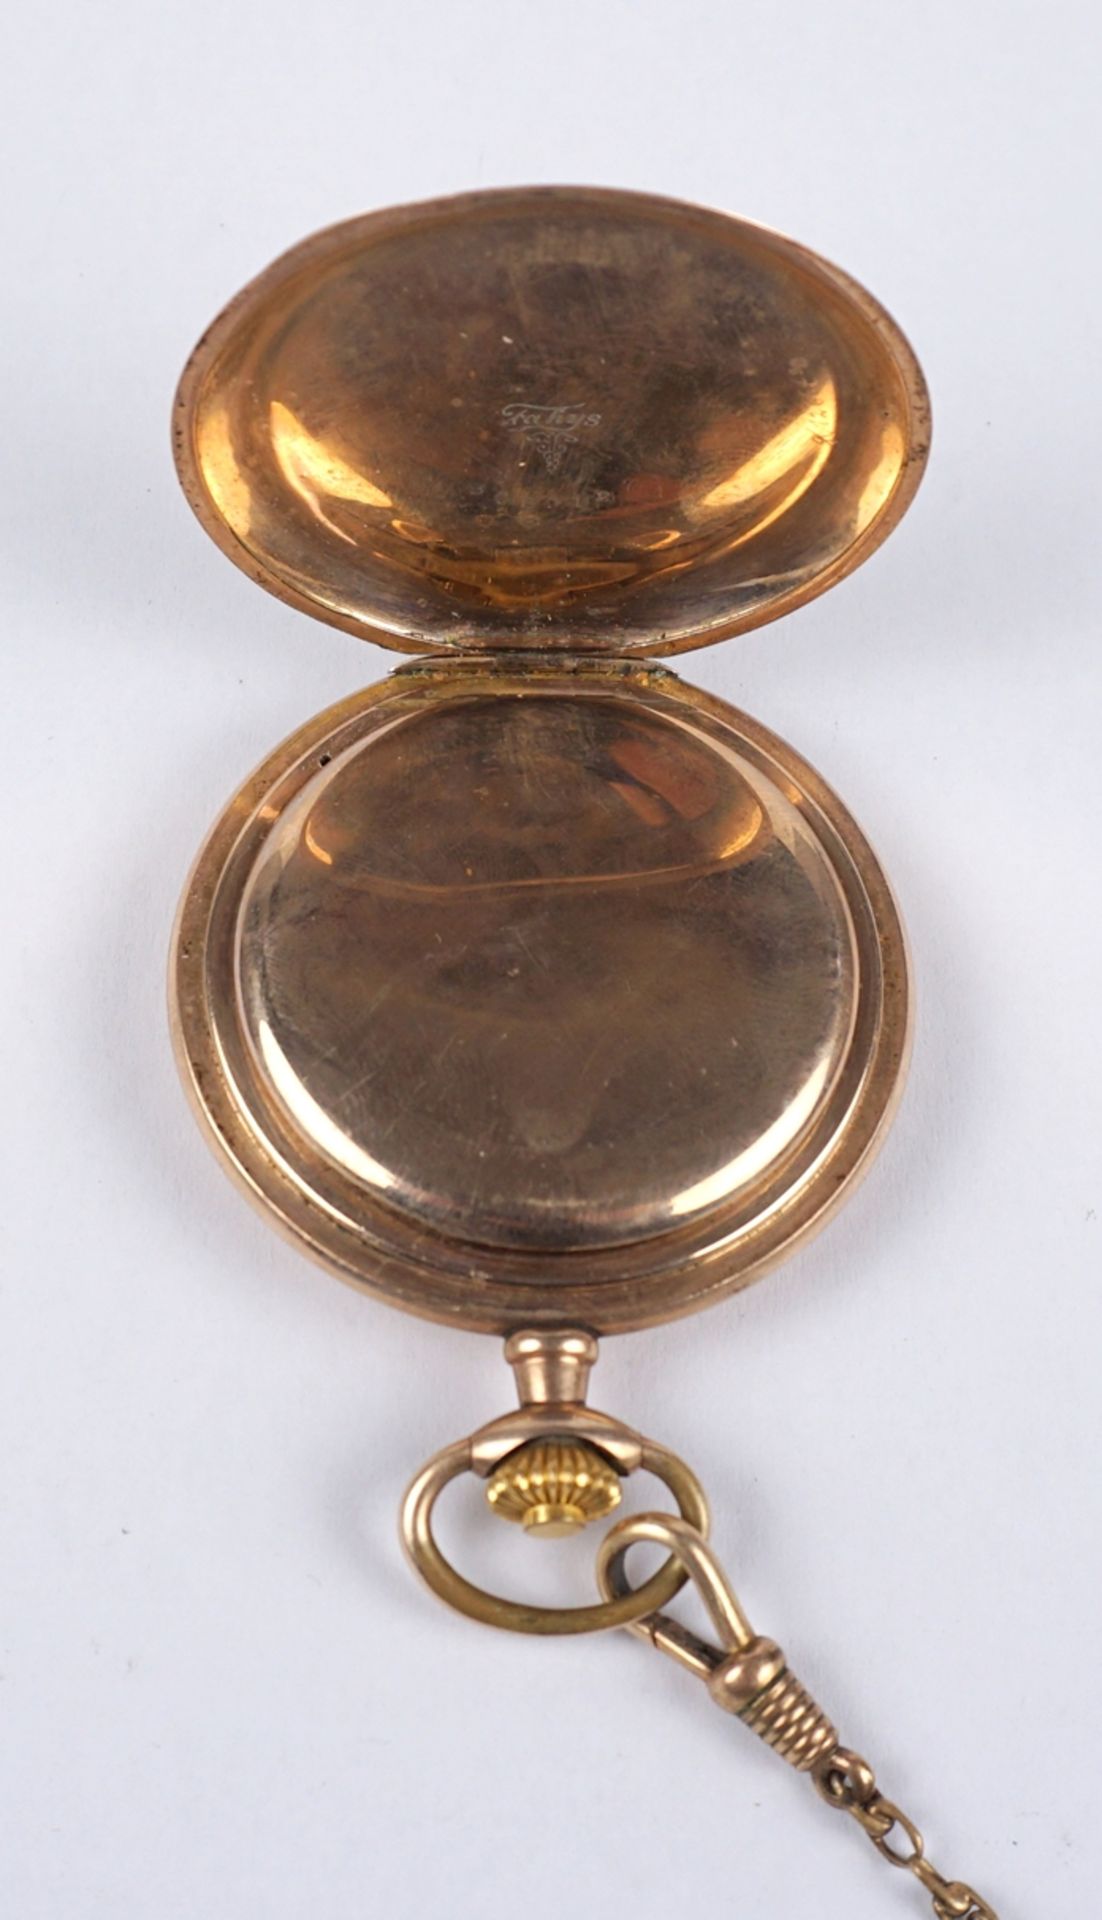 Taschenuhr Omega, 1920er/1930er Jahre, mit Uhrenkette - Image 3 of 3